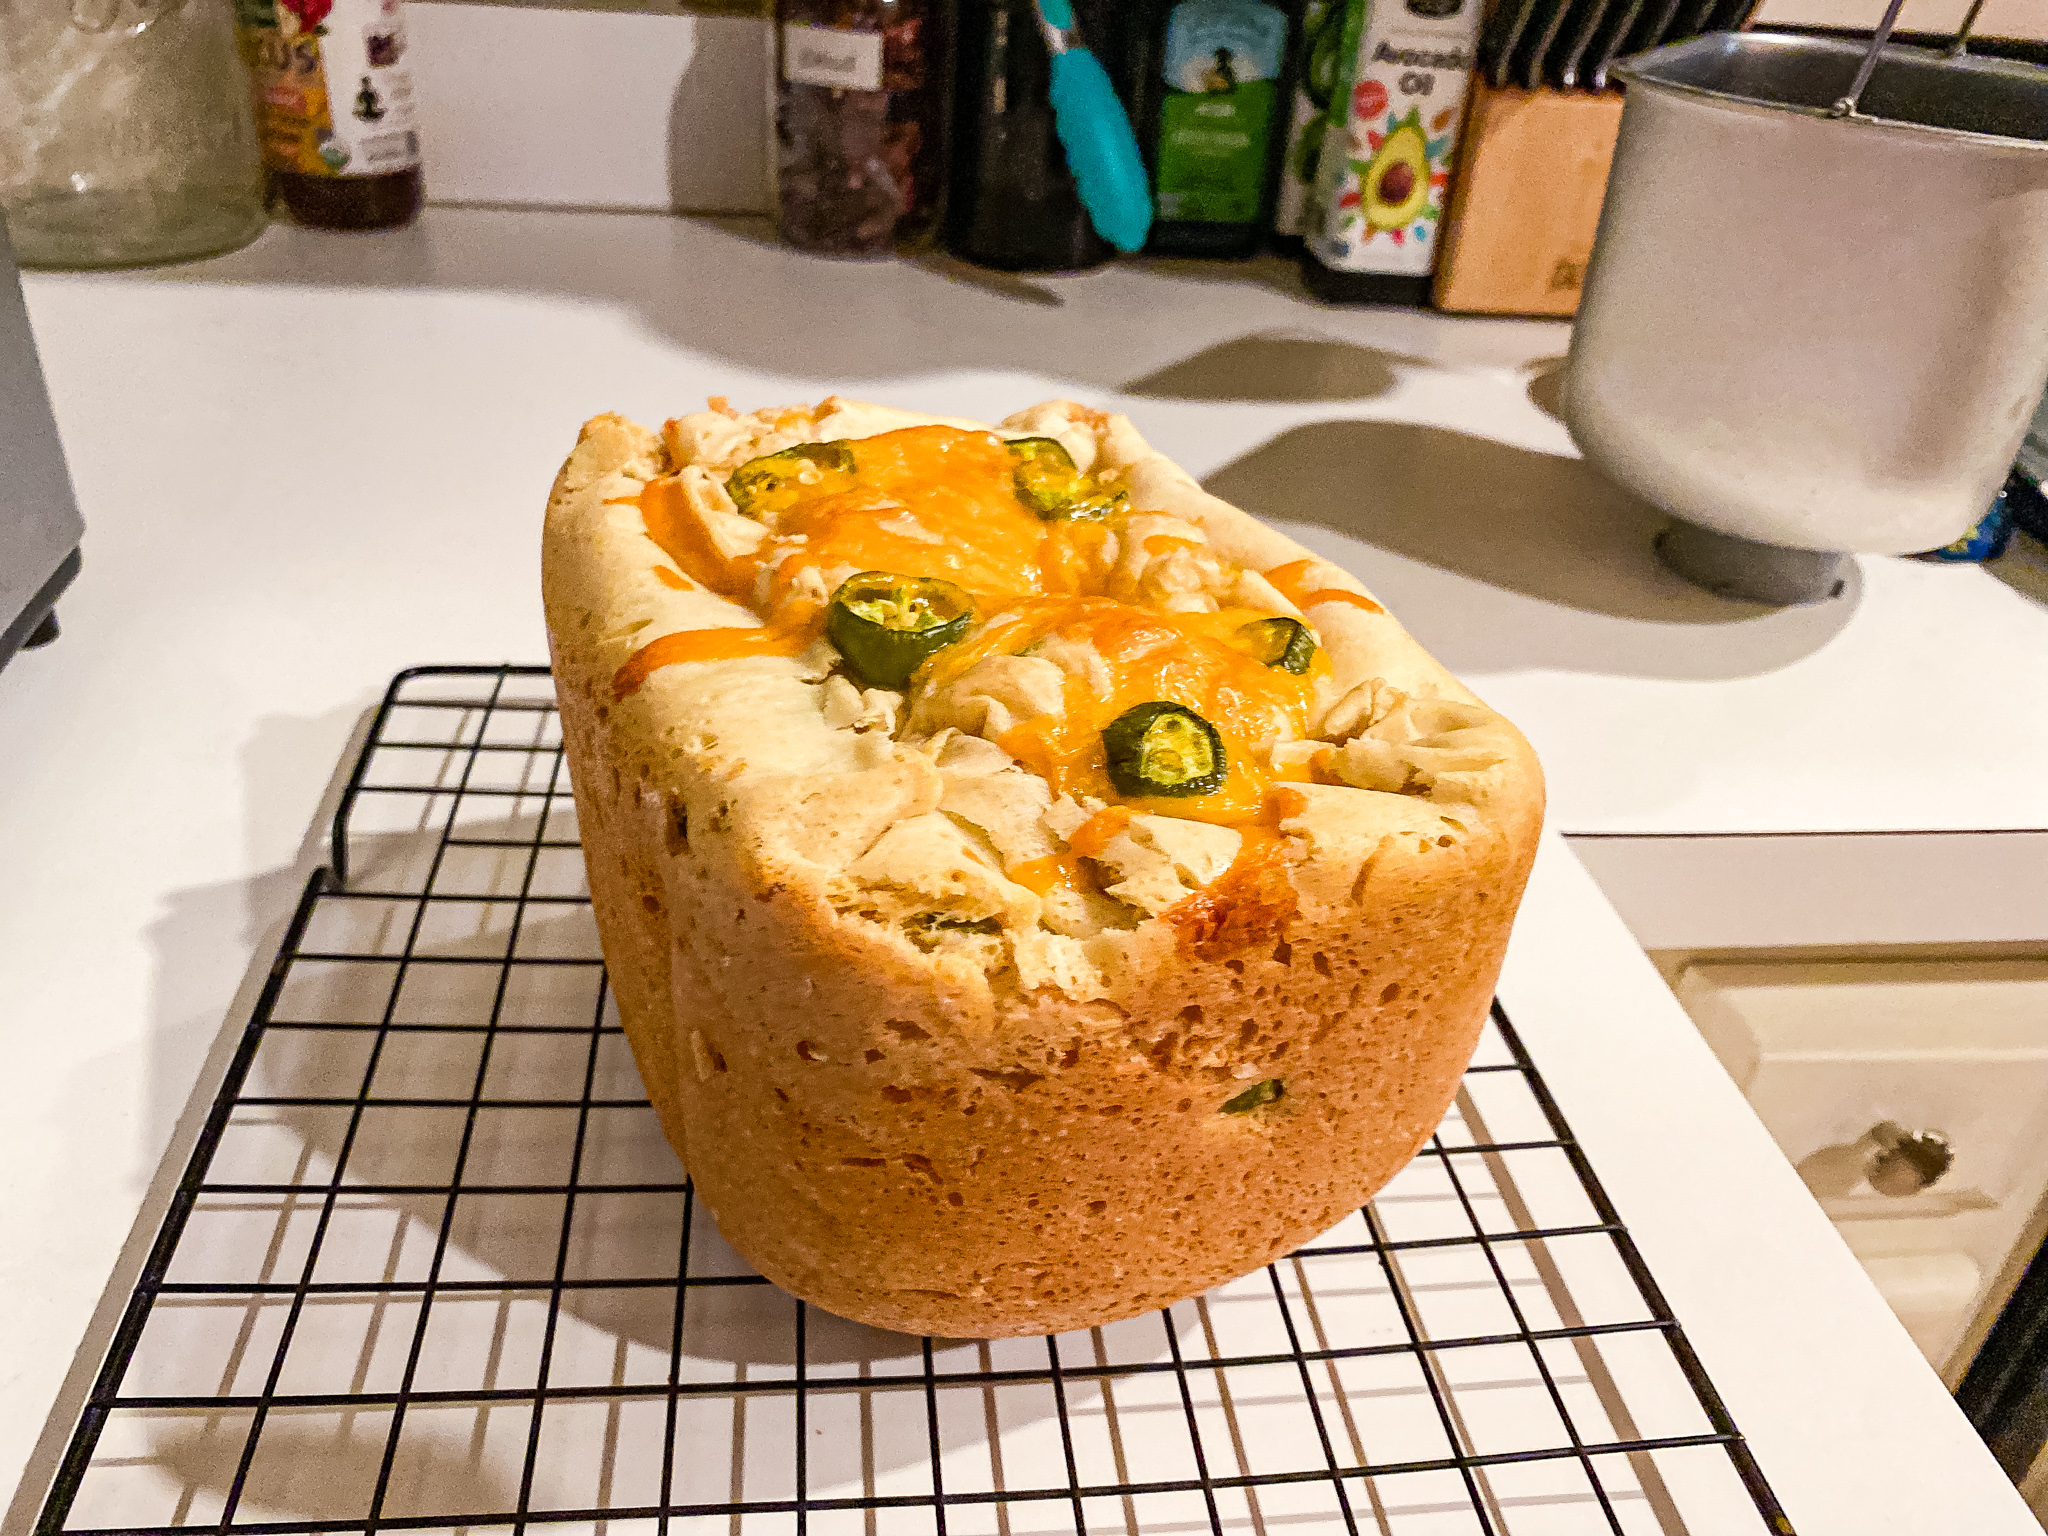 https://modernhomesteadmama.com/wp-content/uploads/2021/08/Jalapeno-Cheese-Bread-in-Bread-Machine-Recipe-14.jpg